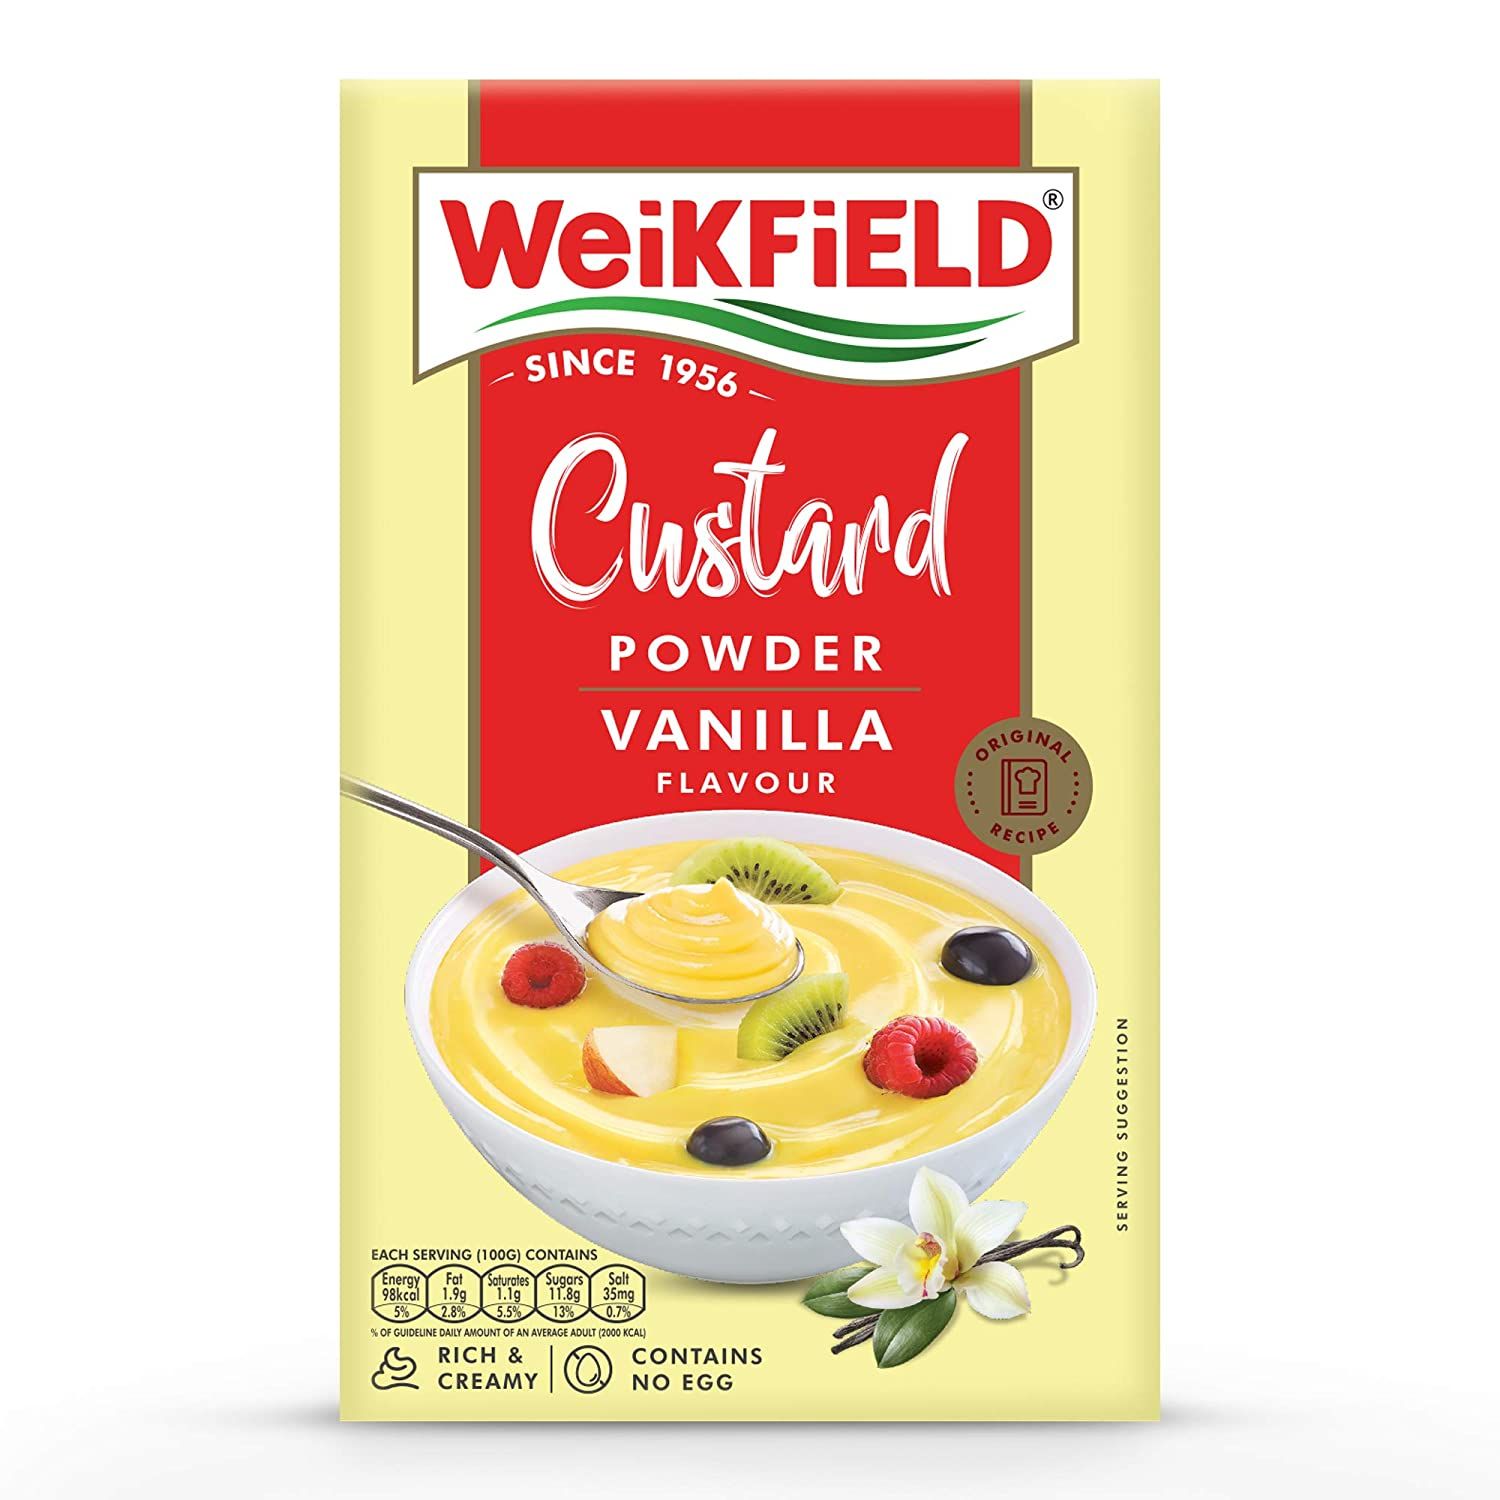 Weikfield Custard Powder Vanilla Image